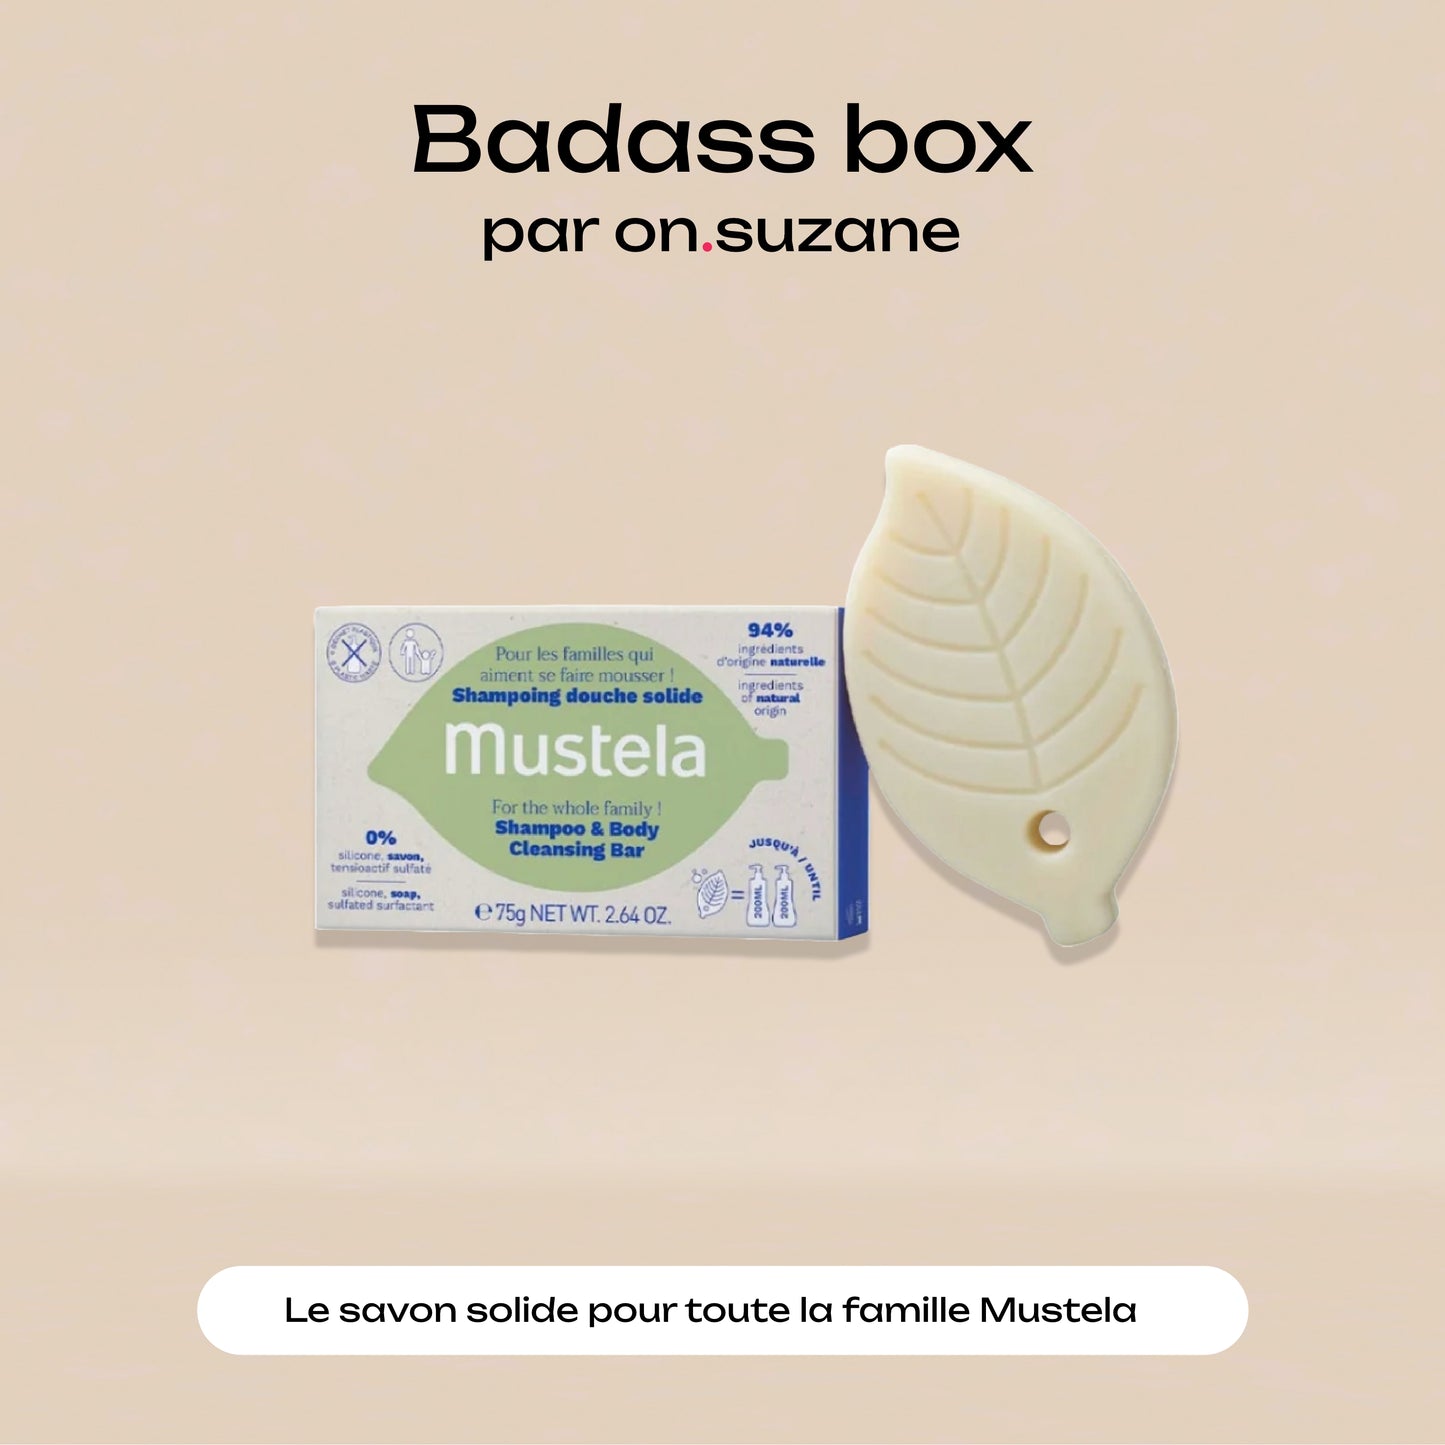 Badass box - Louise